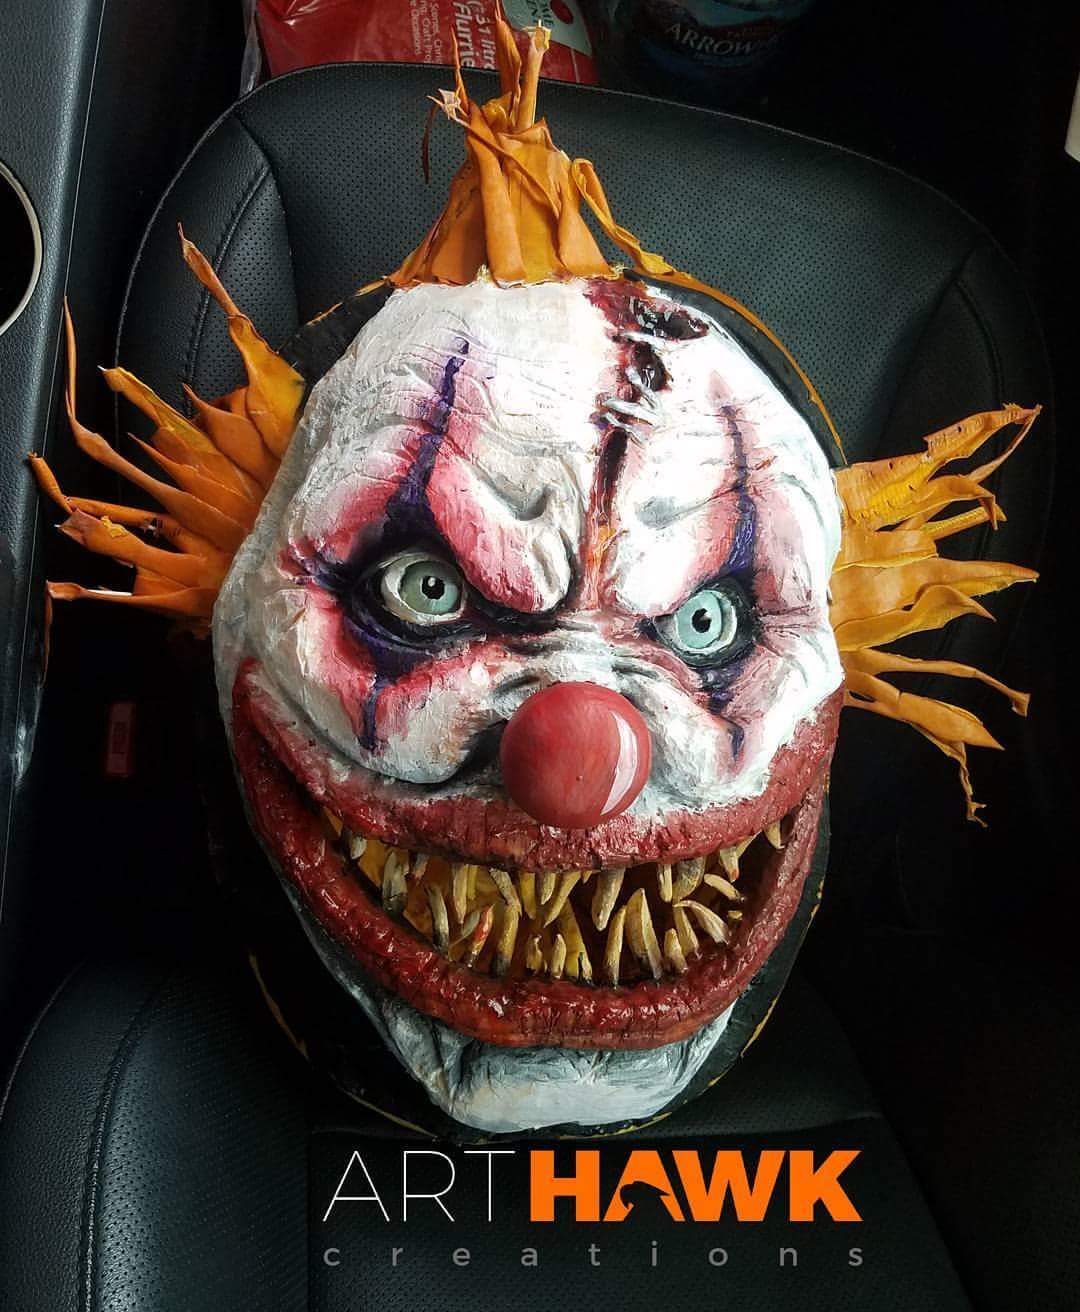 scary clown pumpkin carving